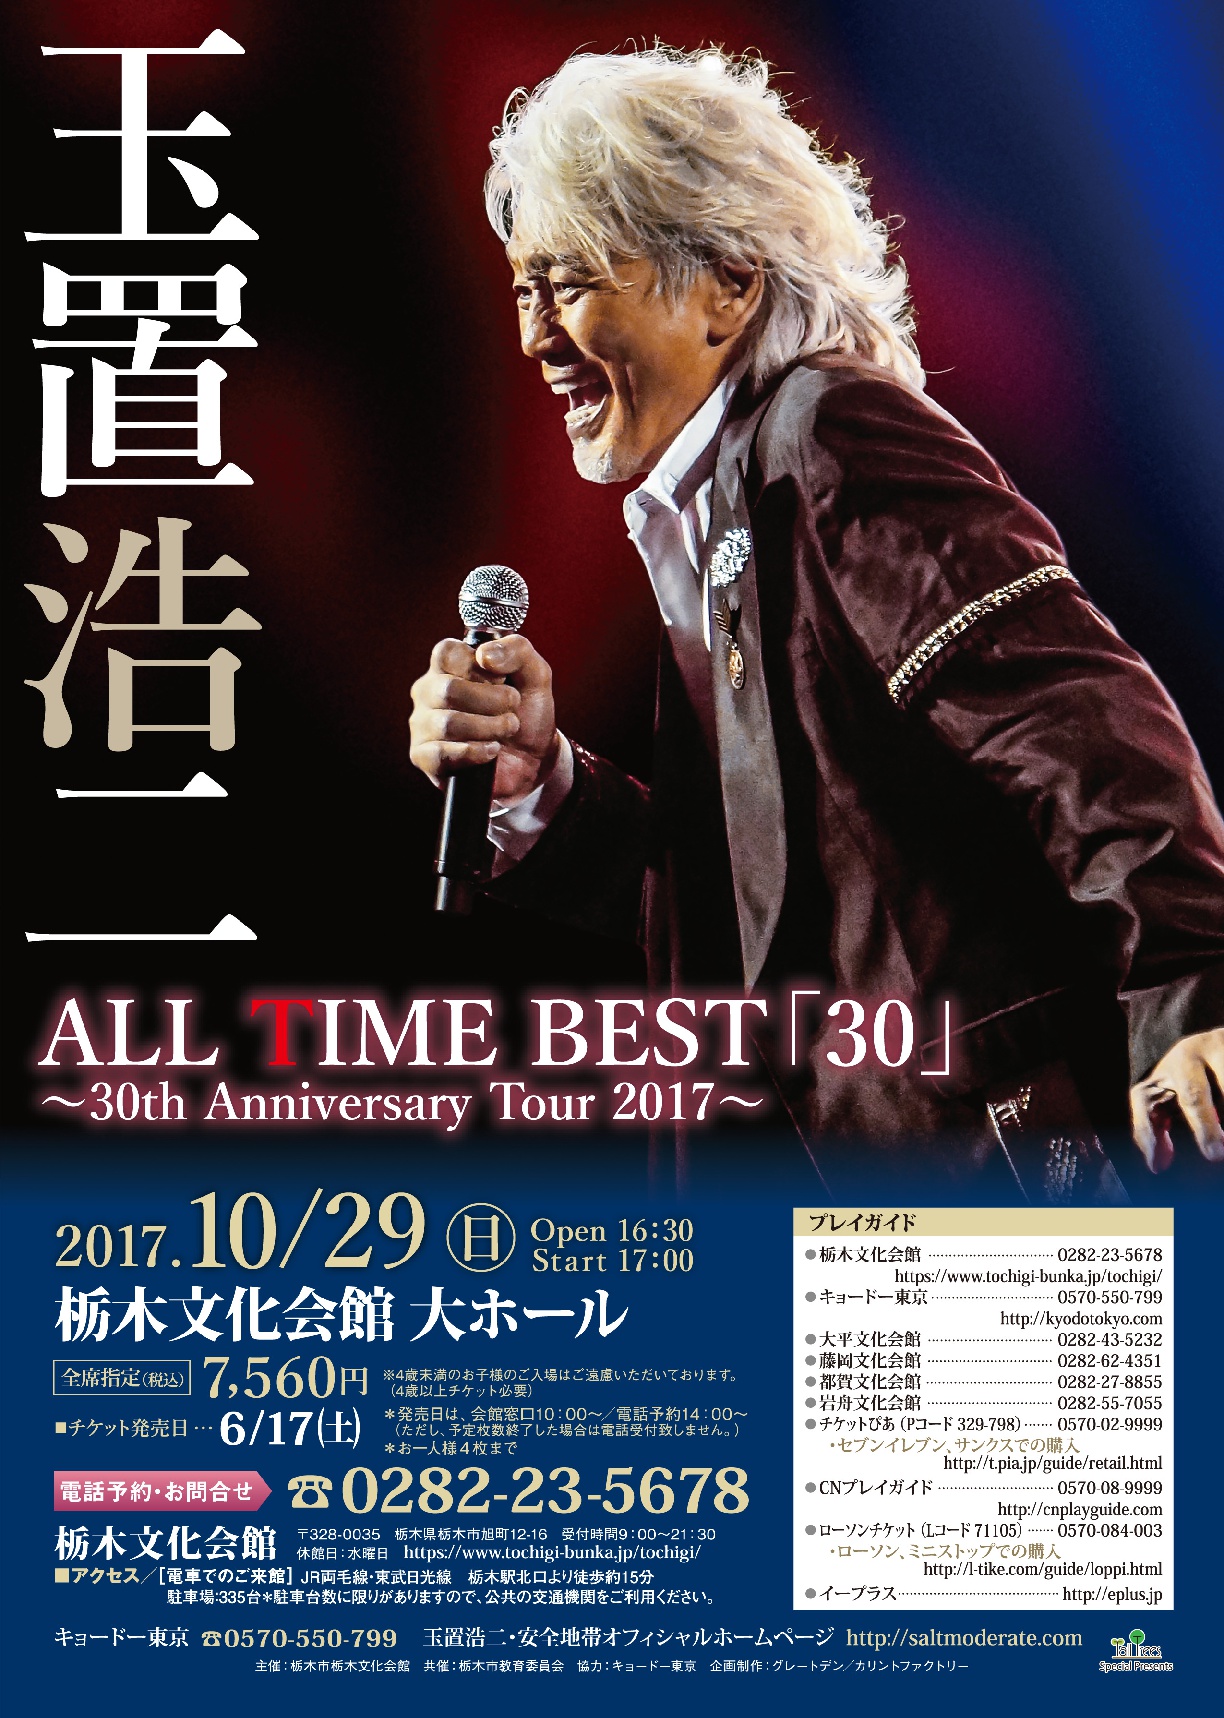 玉置浩二 ALL TIME BEST「30」 〜30th Anniversary Tour 2017〜